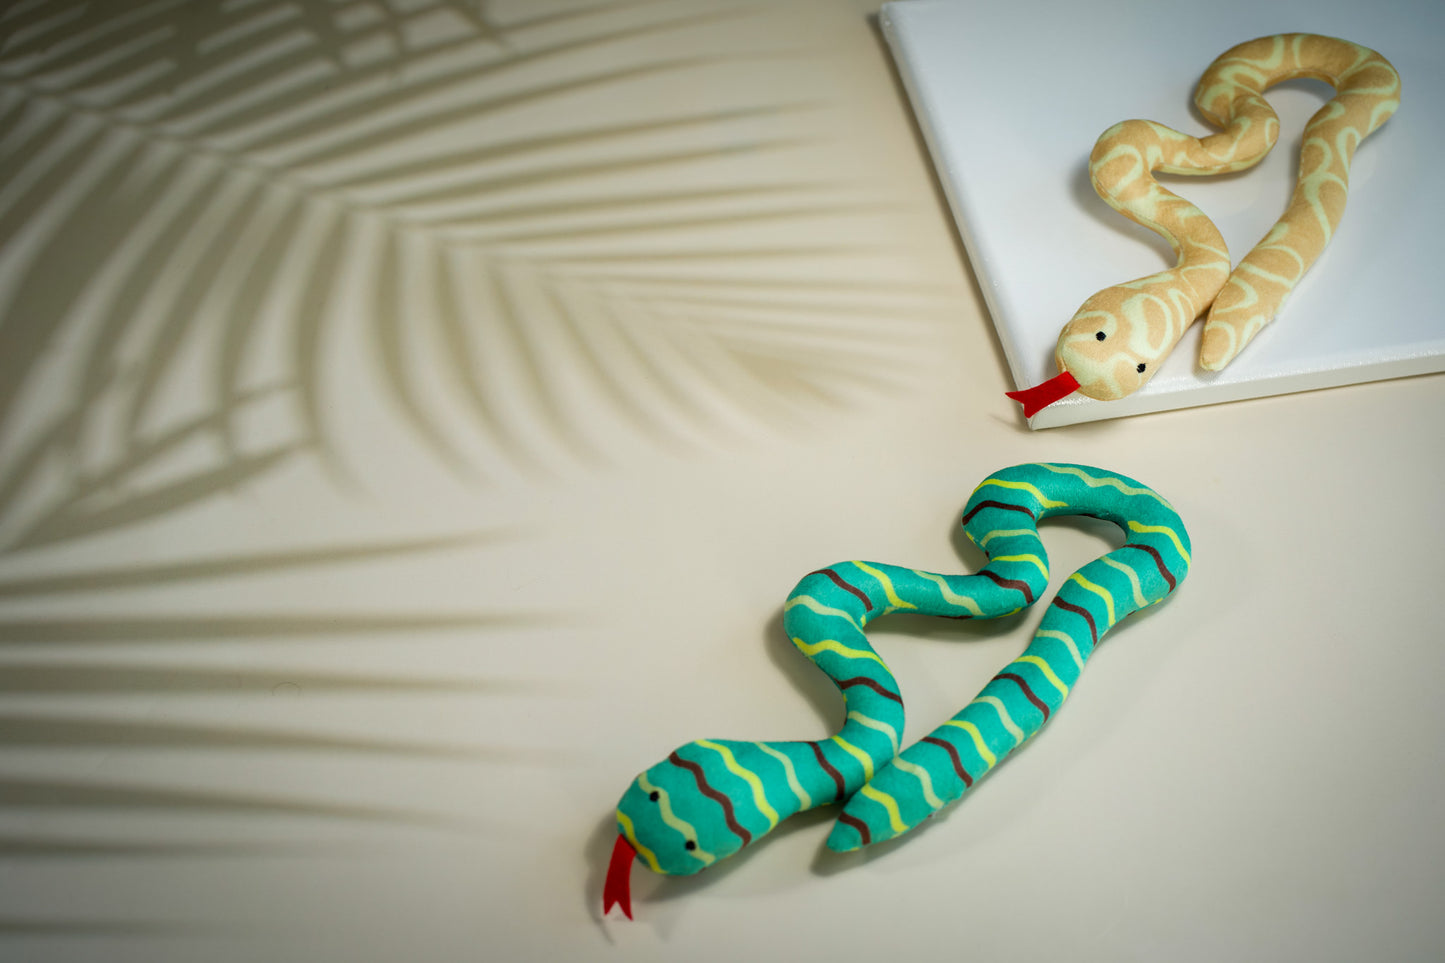 Plush snake cat toys with catnip.